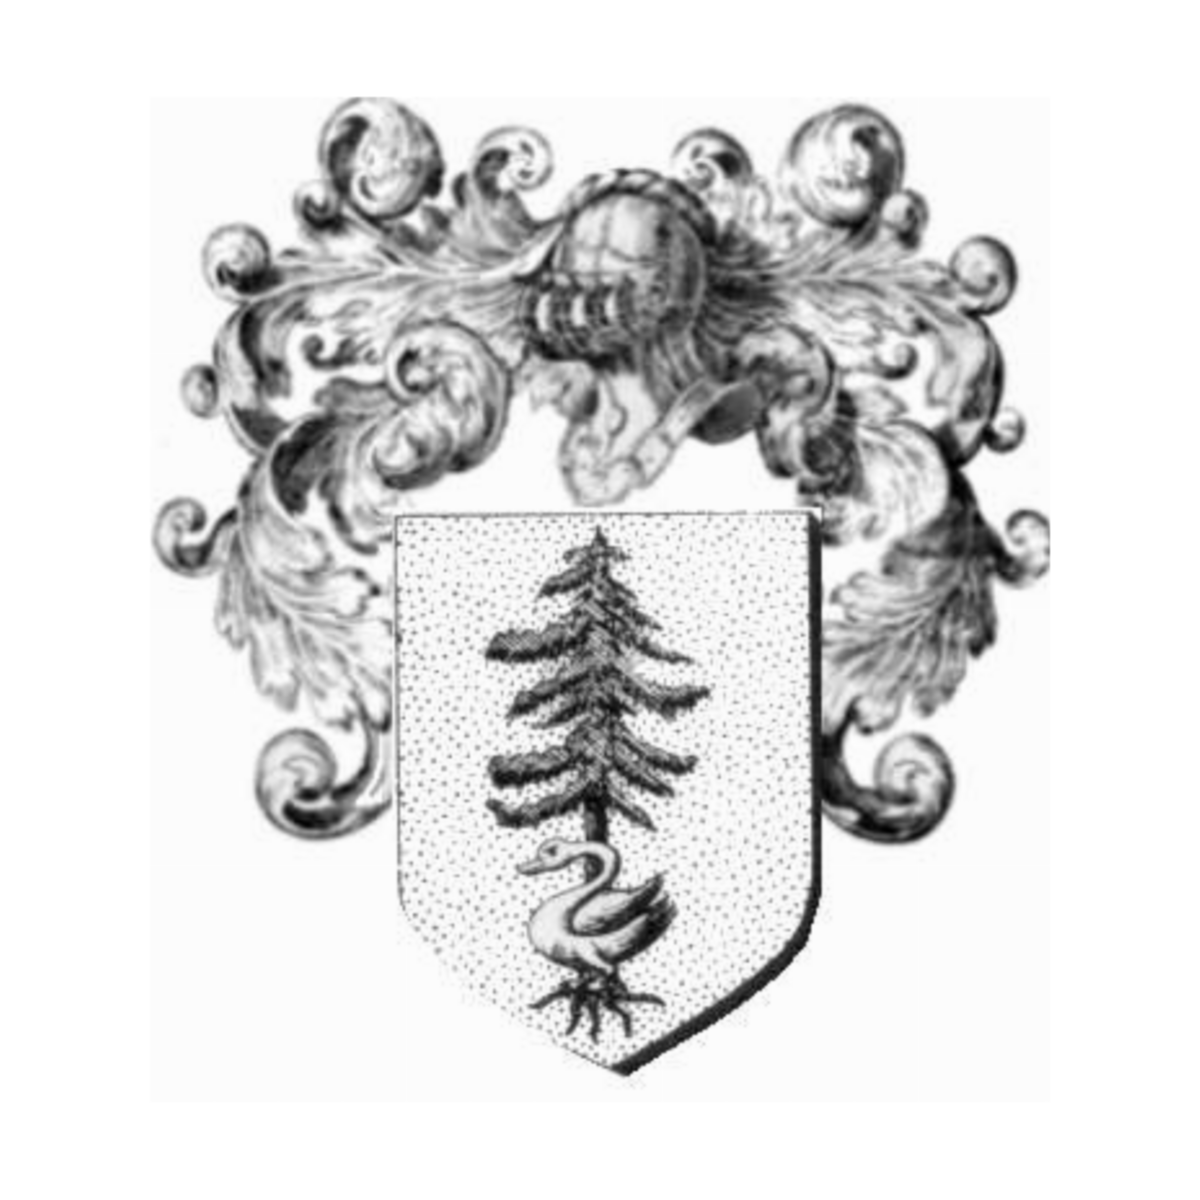 Wappen der FamilieGeffroy